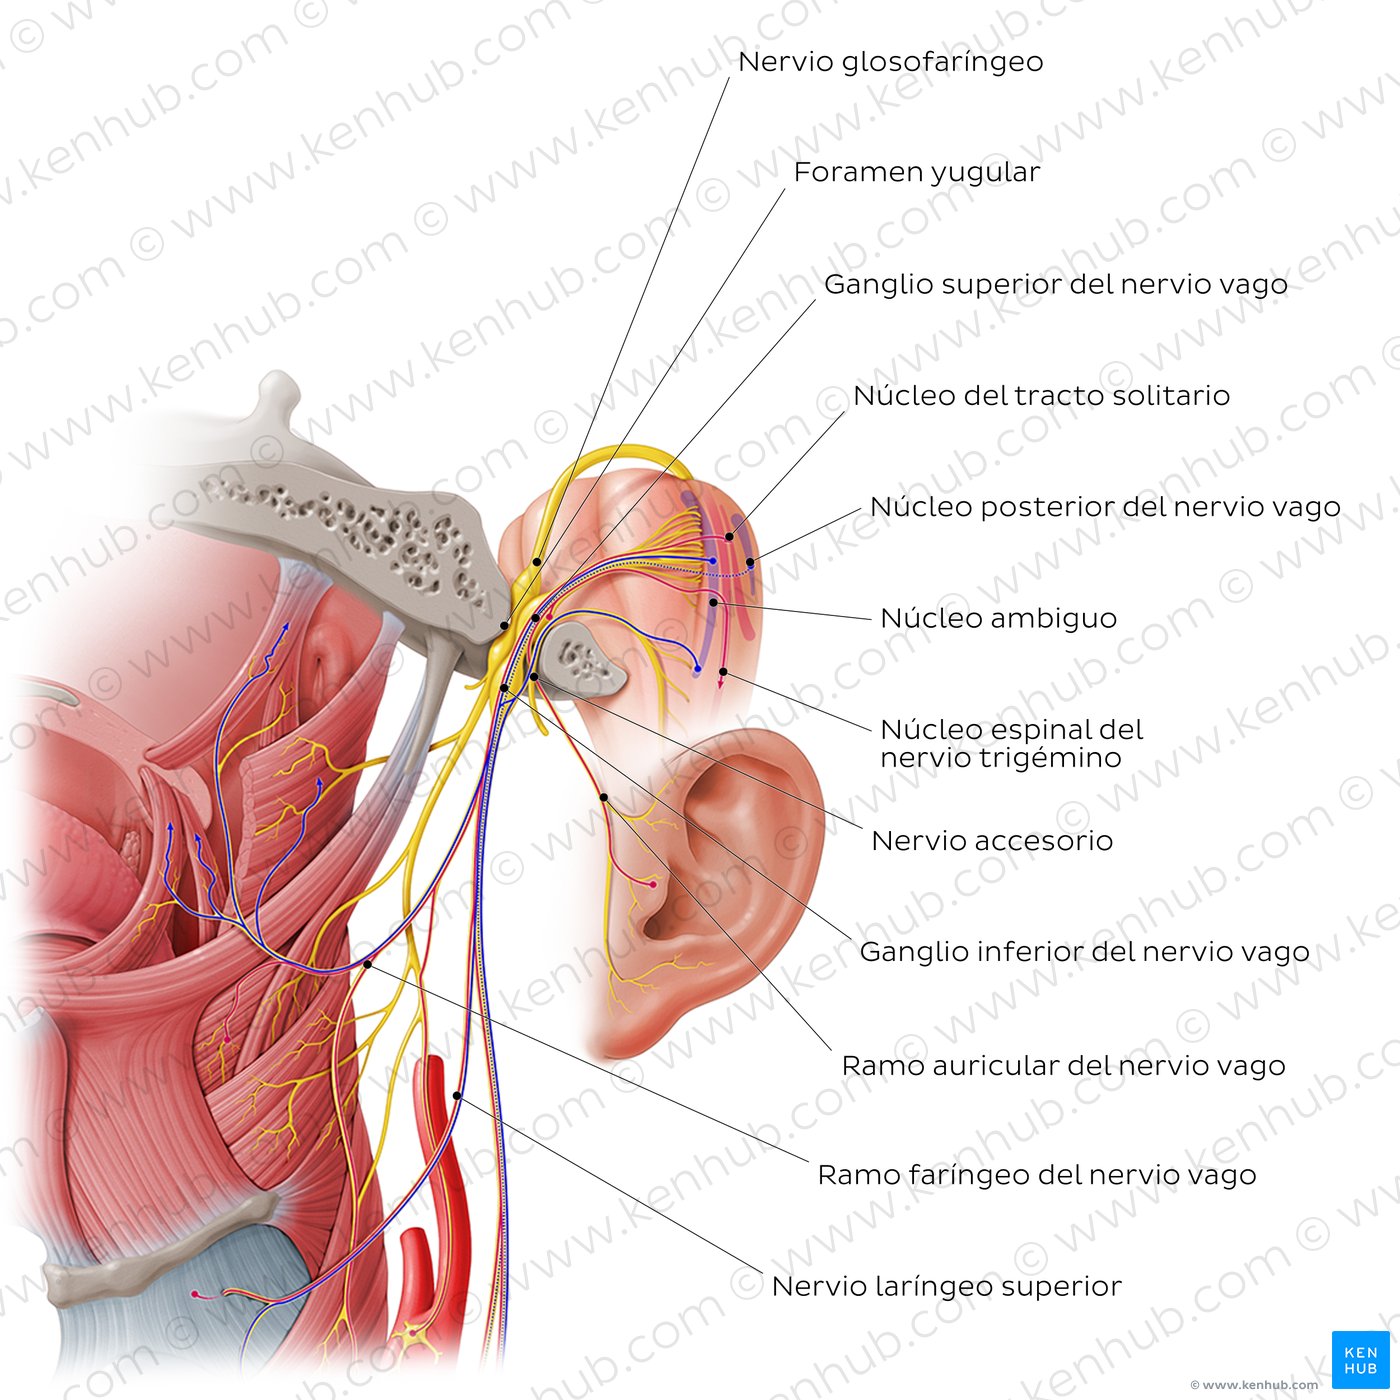 Nervio vago (par craneal X)